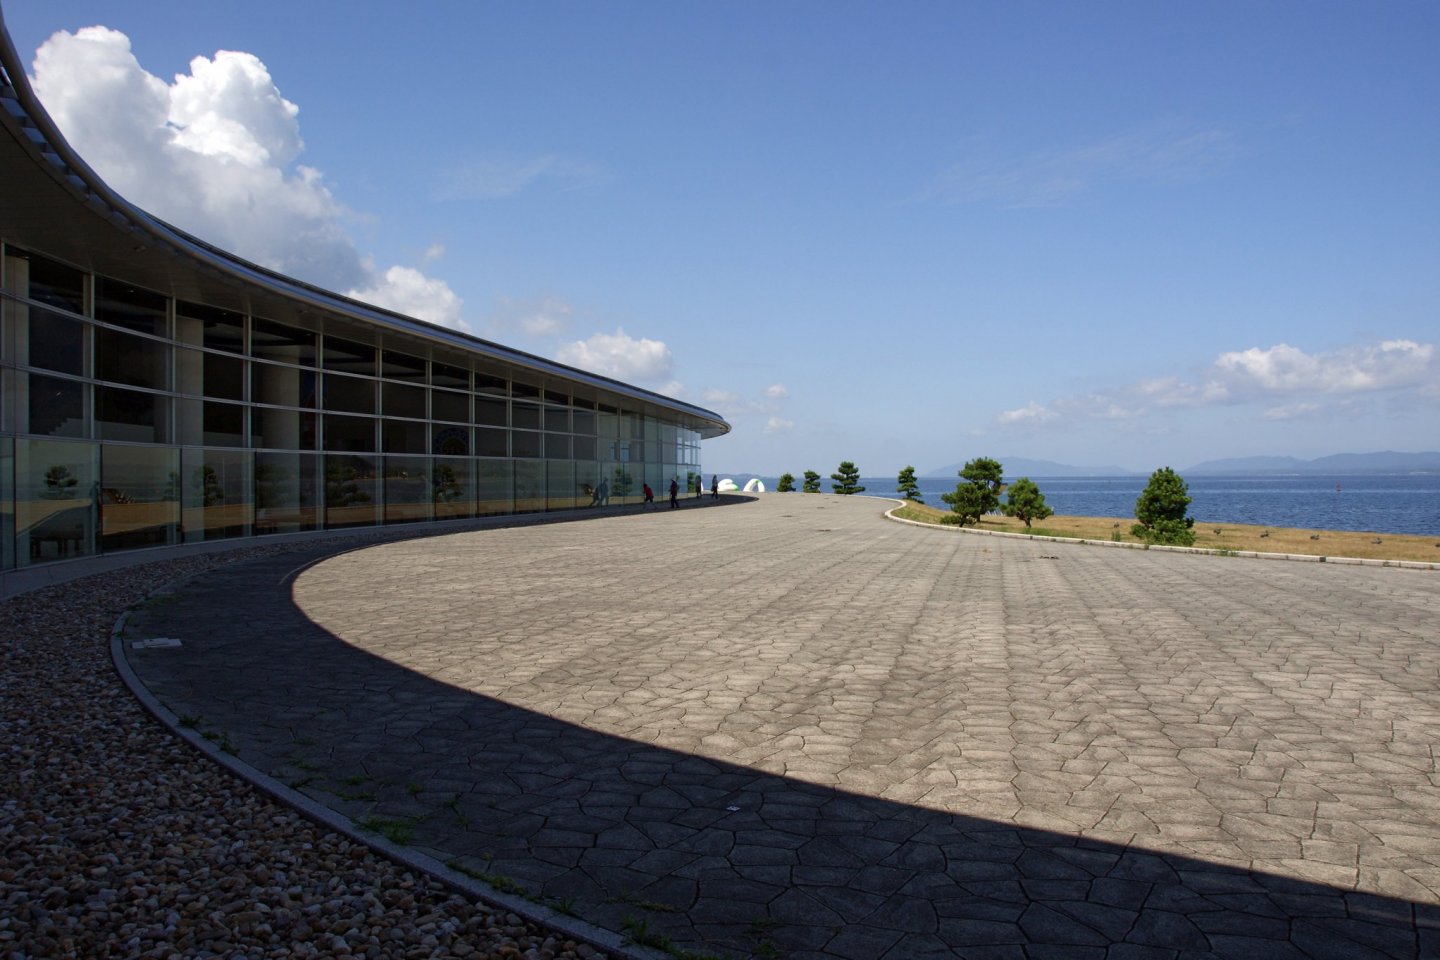 The Shimane Art Museum was designed by Kiyonori Kikutake.